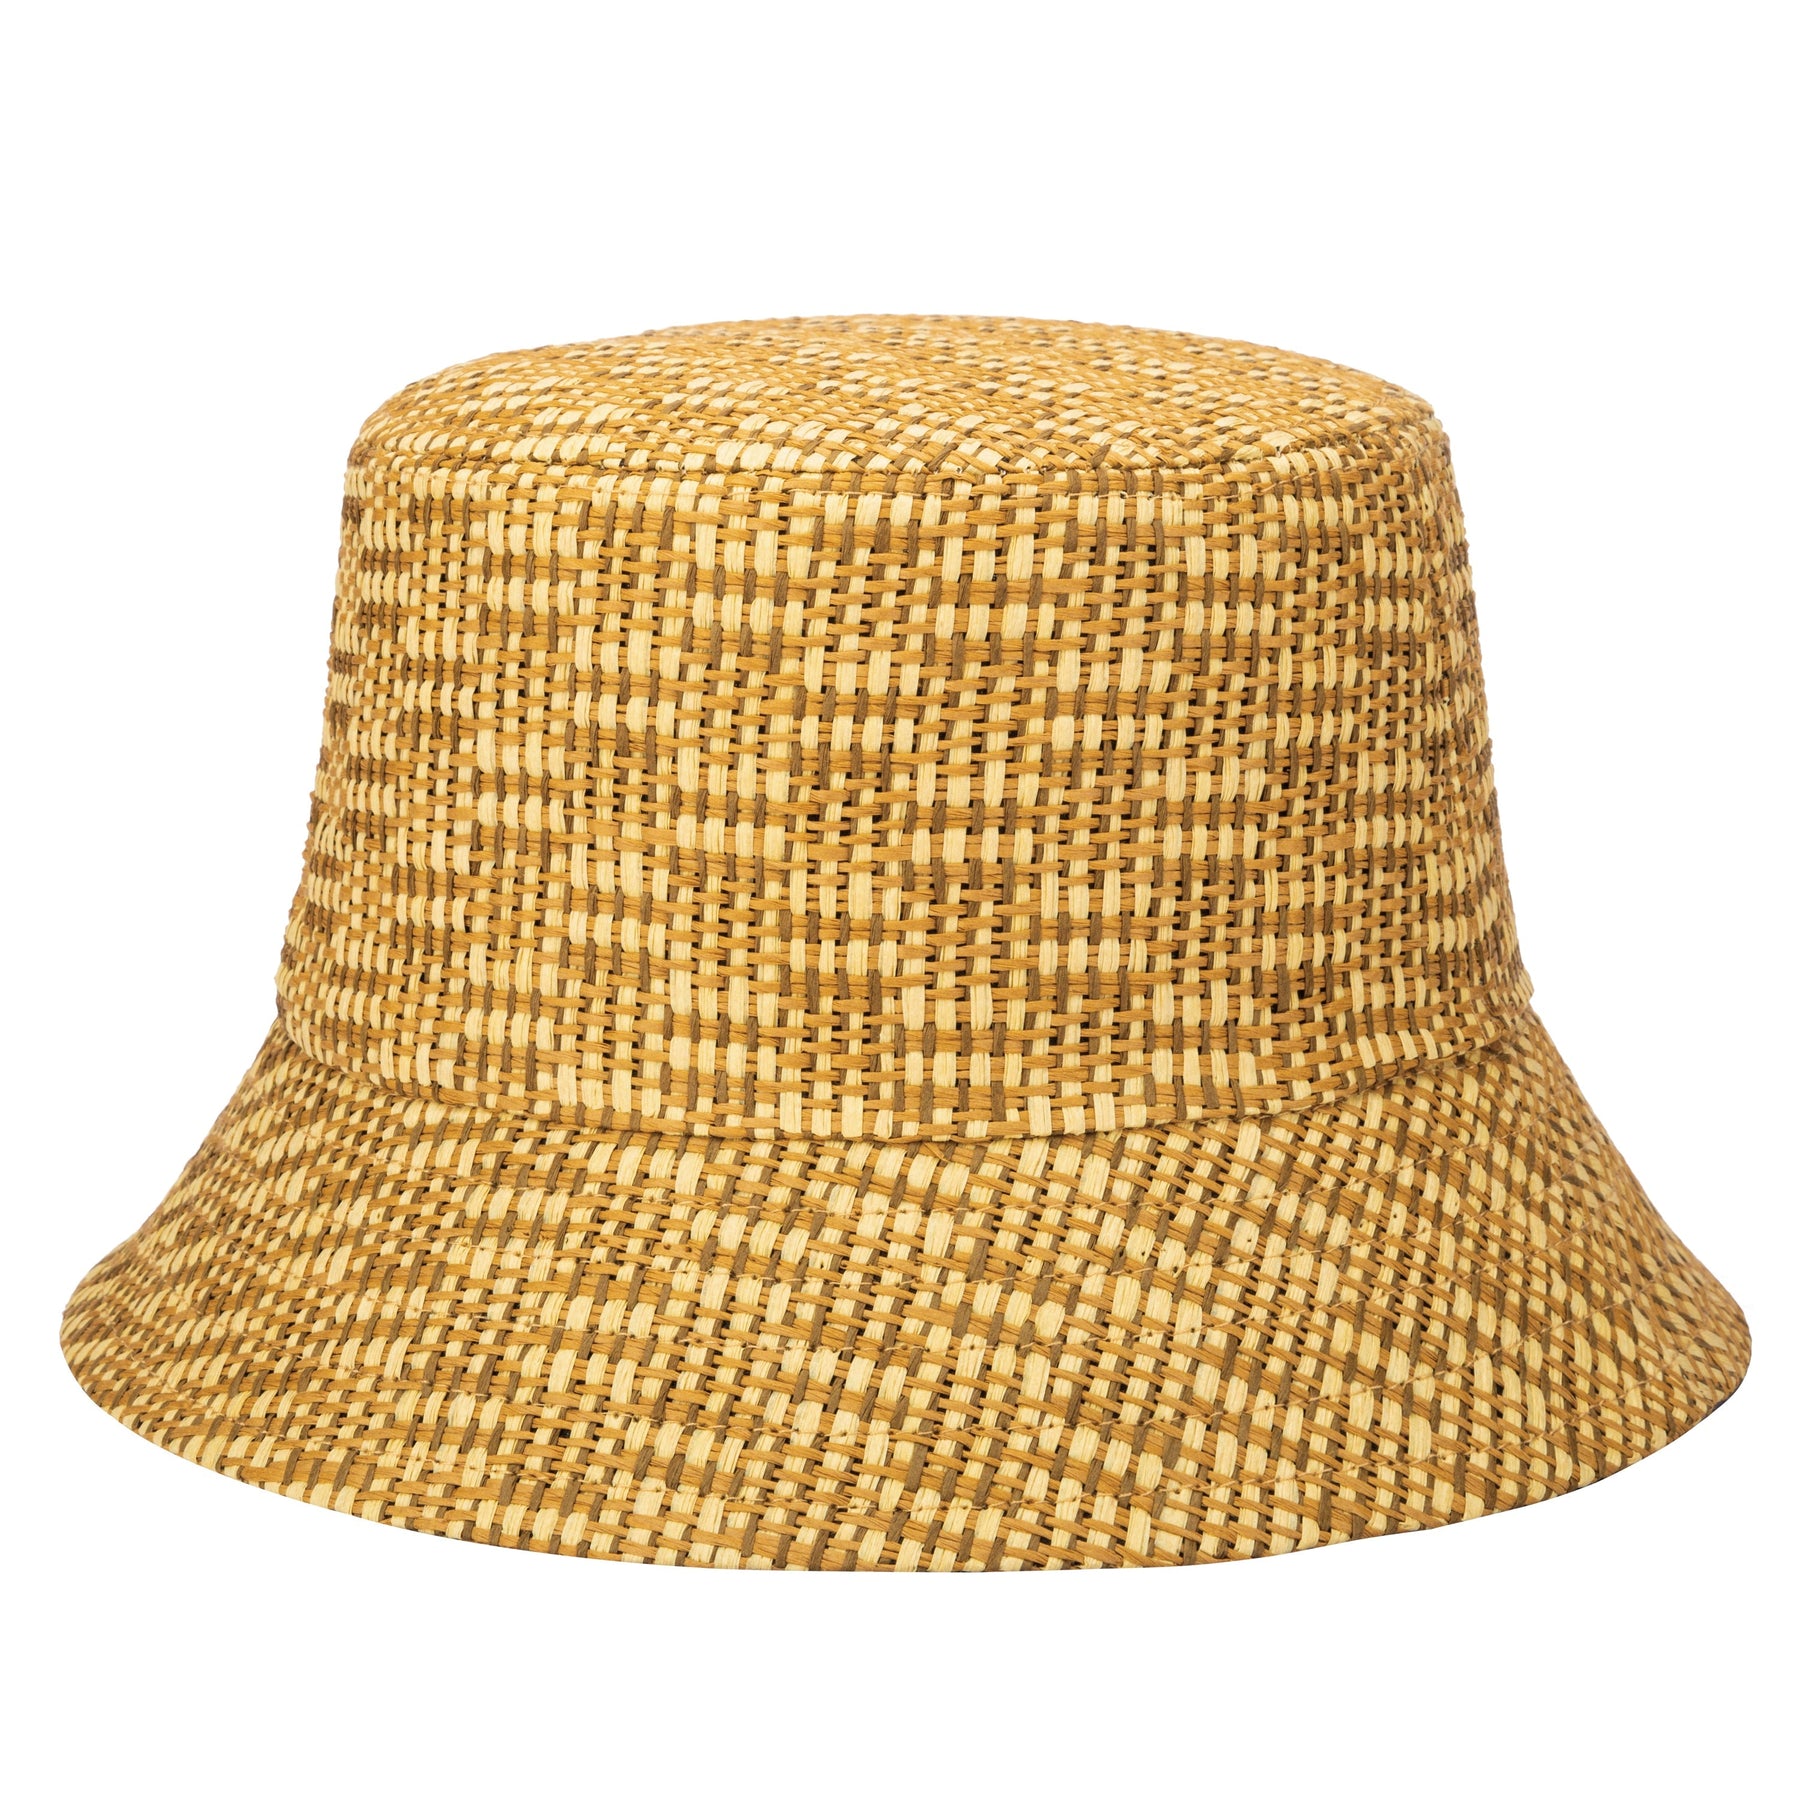 Four Buttons Women's Textured Woven Bucket Hat Natural